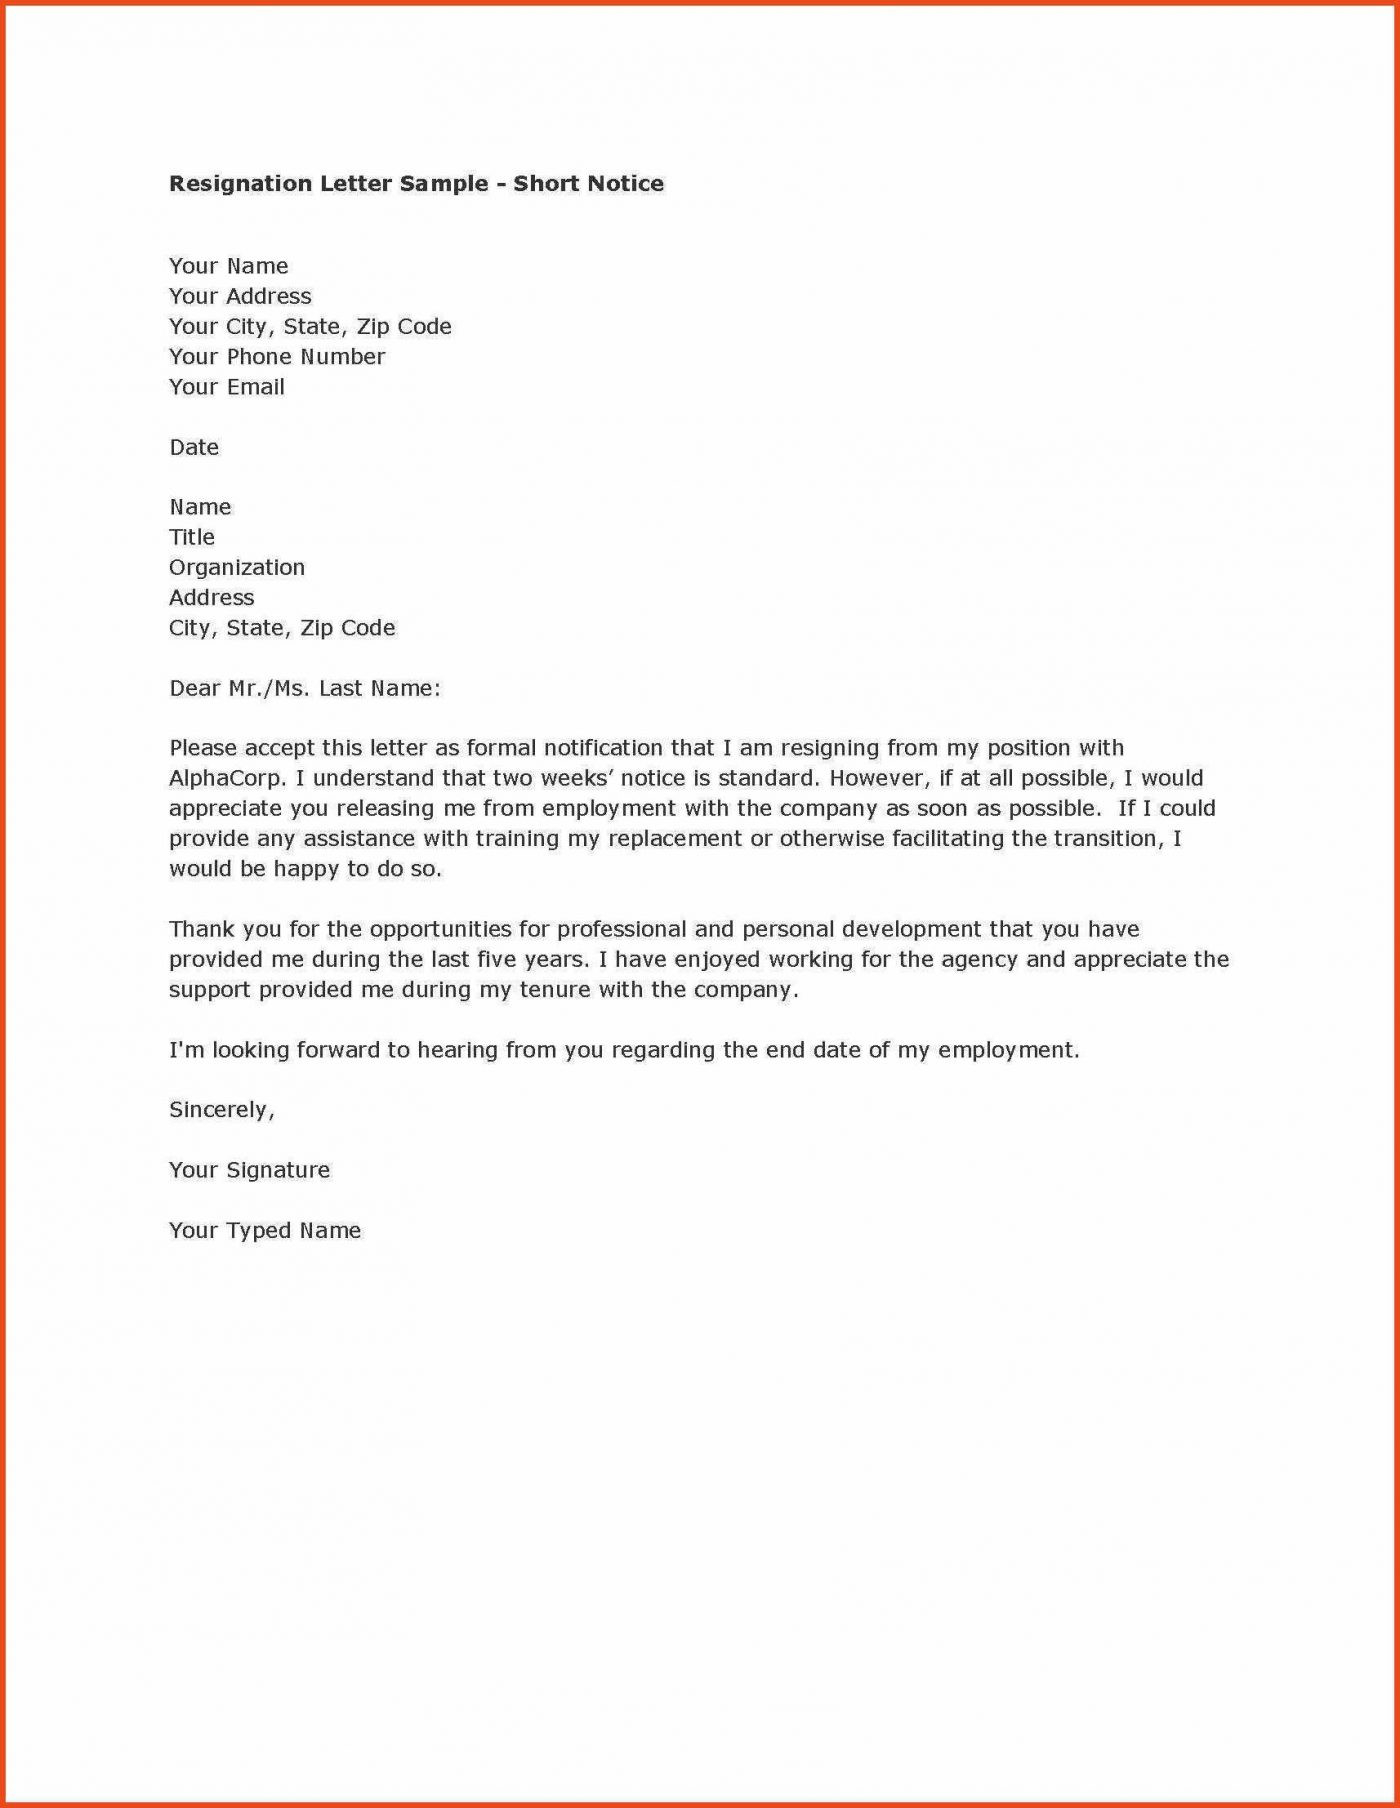 Free Resignation Letter Template Microsoft Word Download - Teacher Newsletter Templates Word Inspirational Sample Resignation